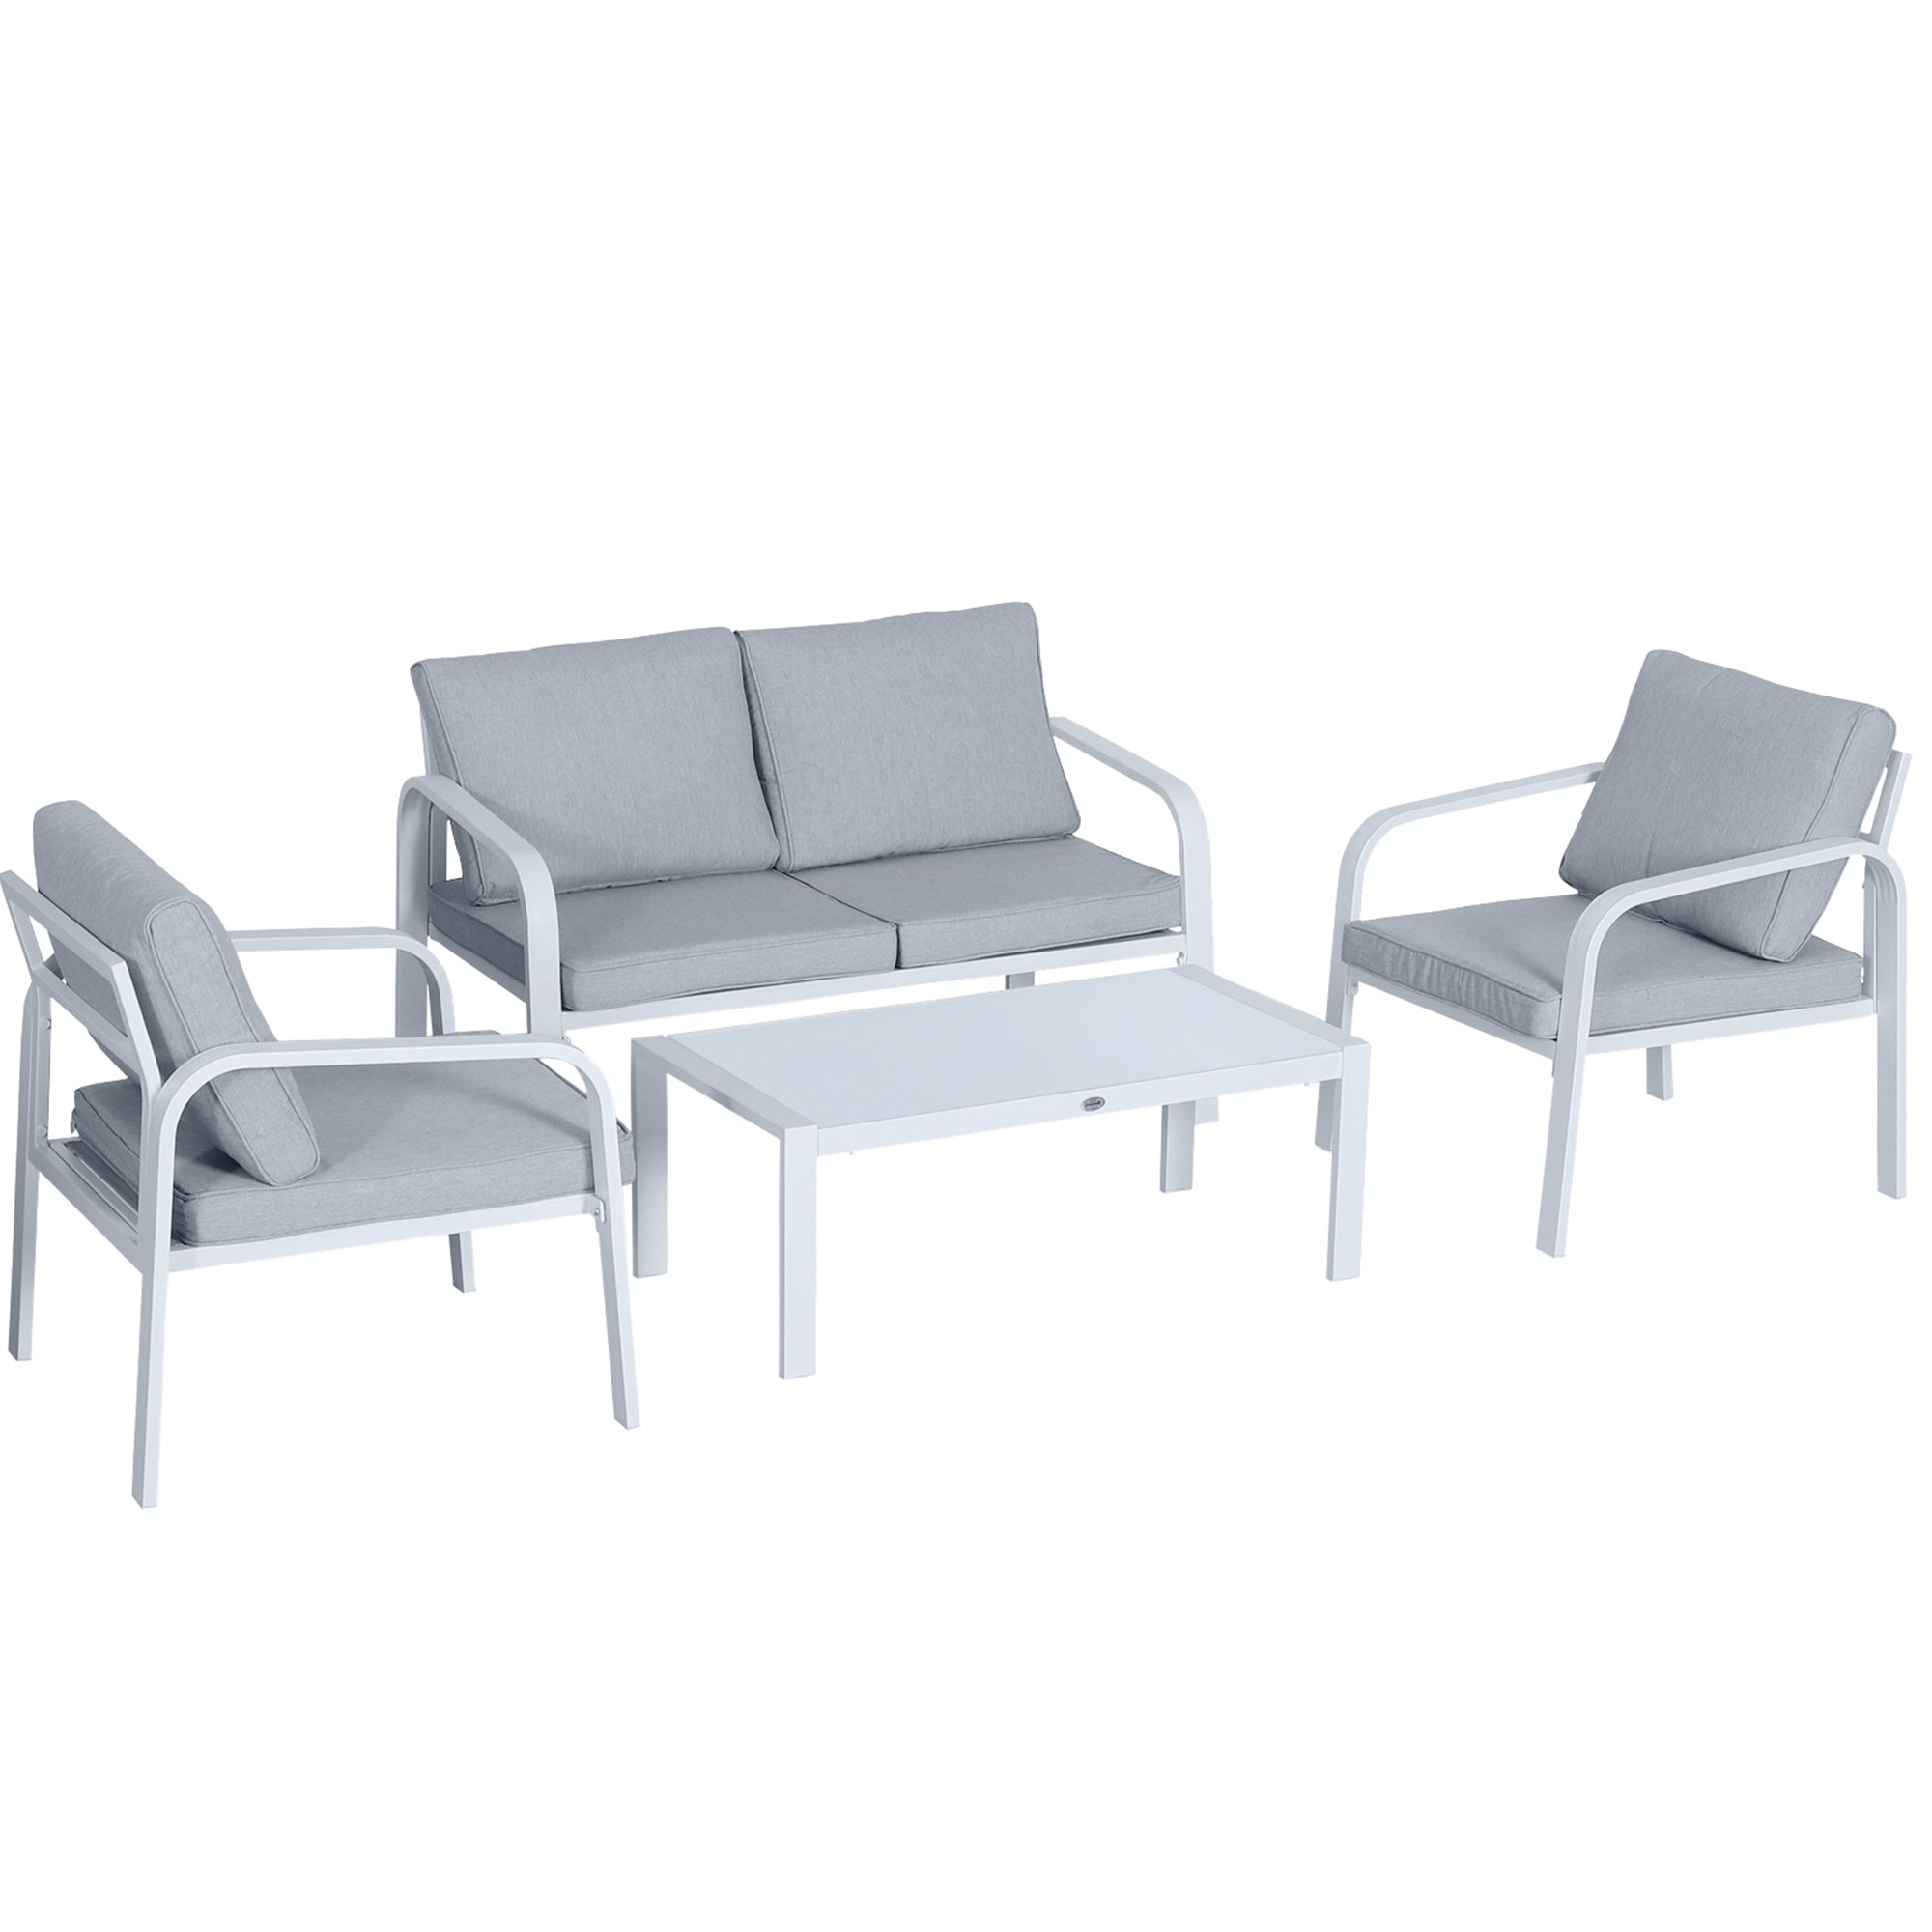 Outsunny 4pcs Garden Loveseat Chairs Table Furniture Aluminum w/ Cushion - White  | TJ Hughes